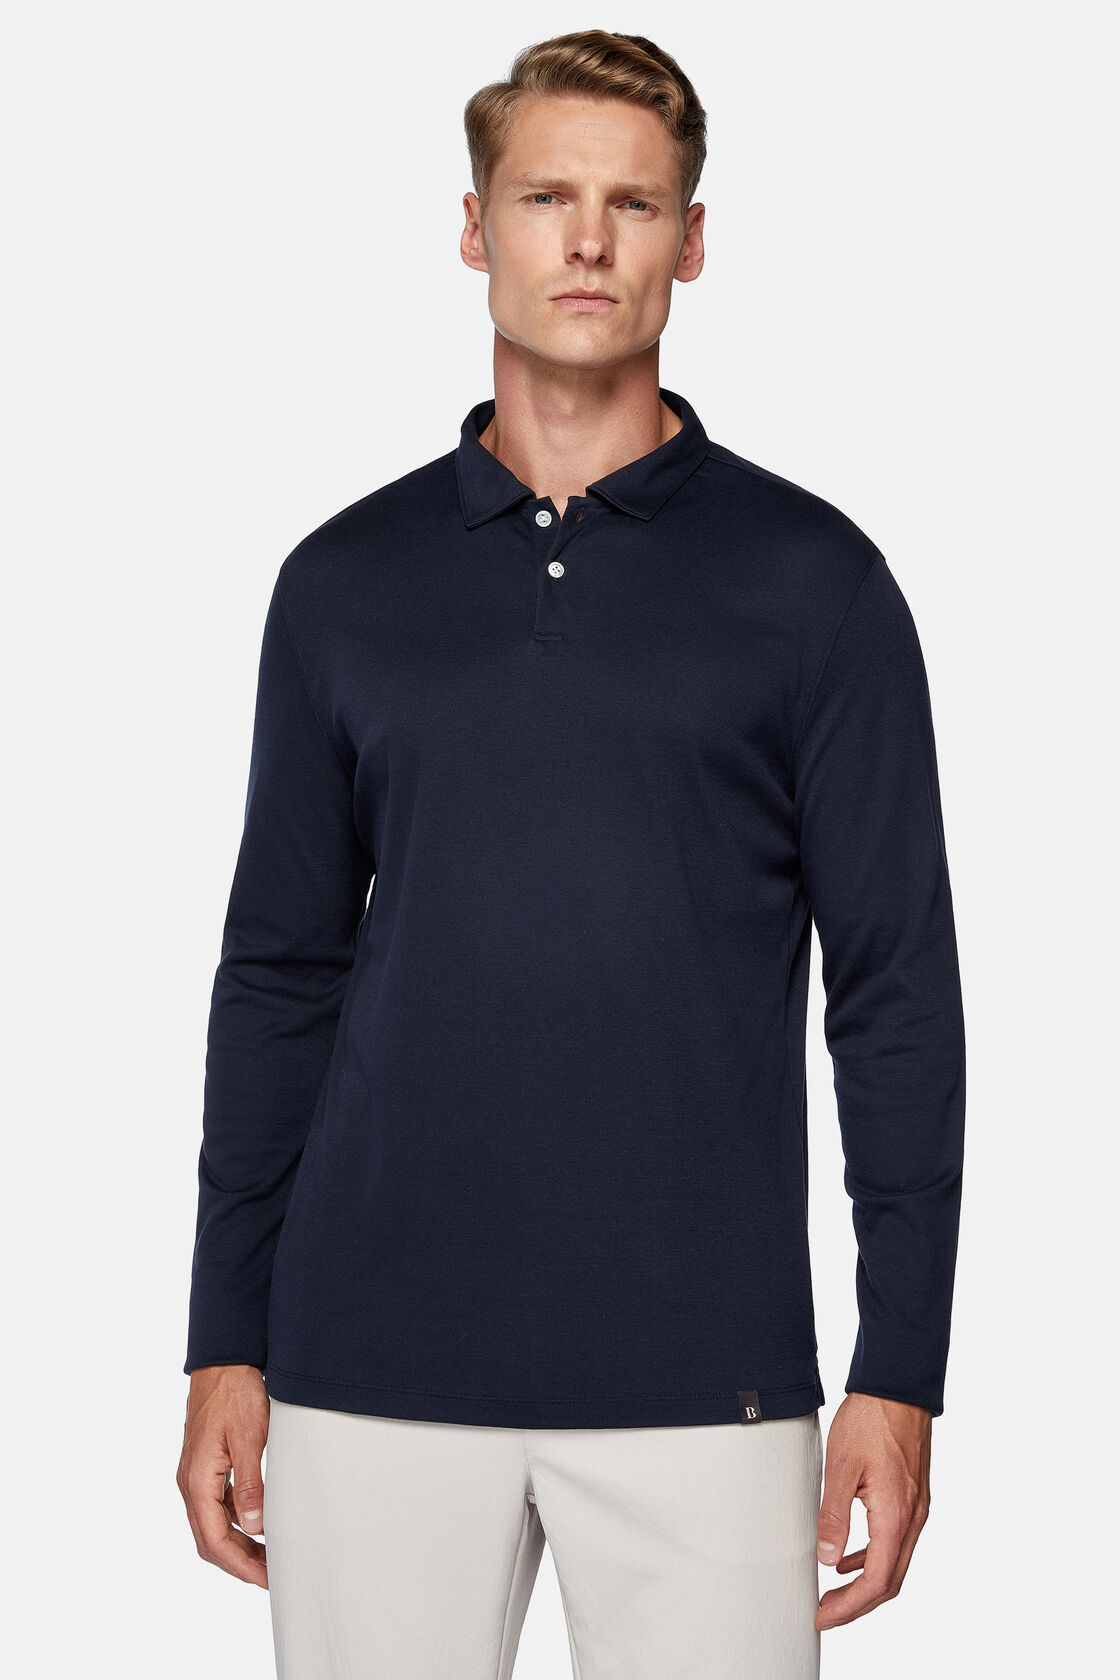 Polo Shirt in a Cotton Blend High-Performance Jersey Regular, Navy blue, hi-res